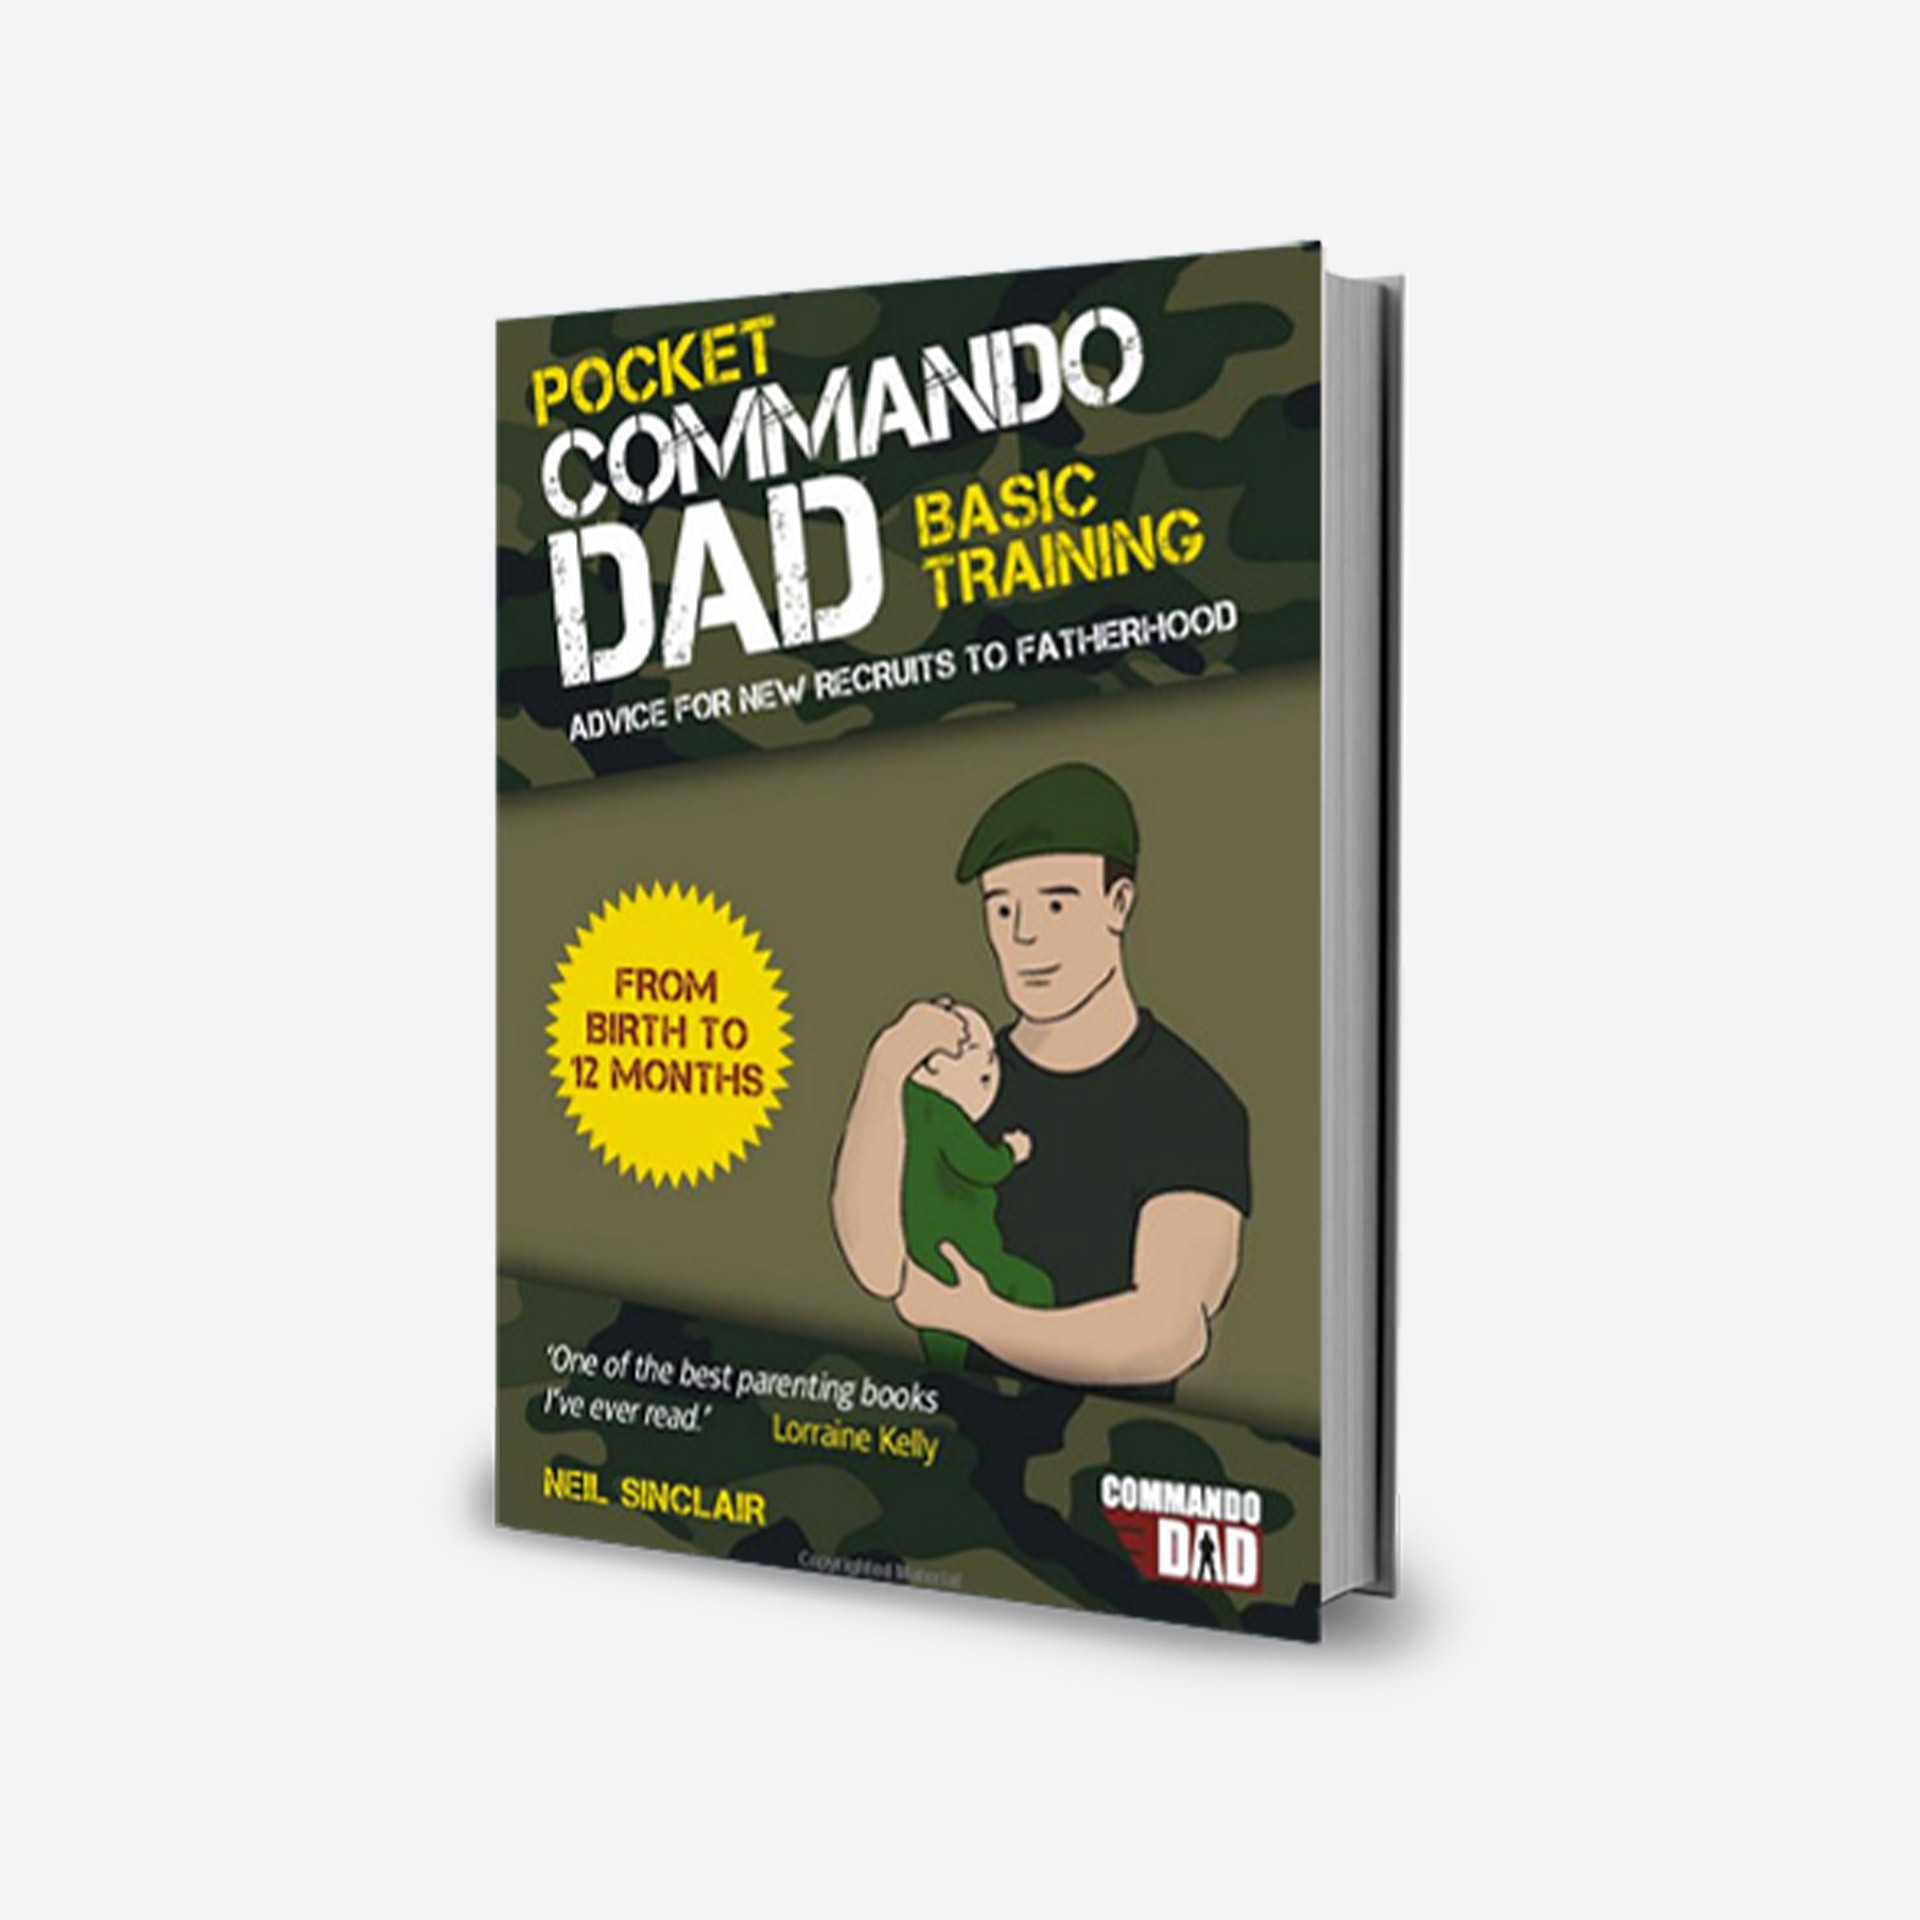 Commando Dad: Basic Training (Pocket Edition)